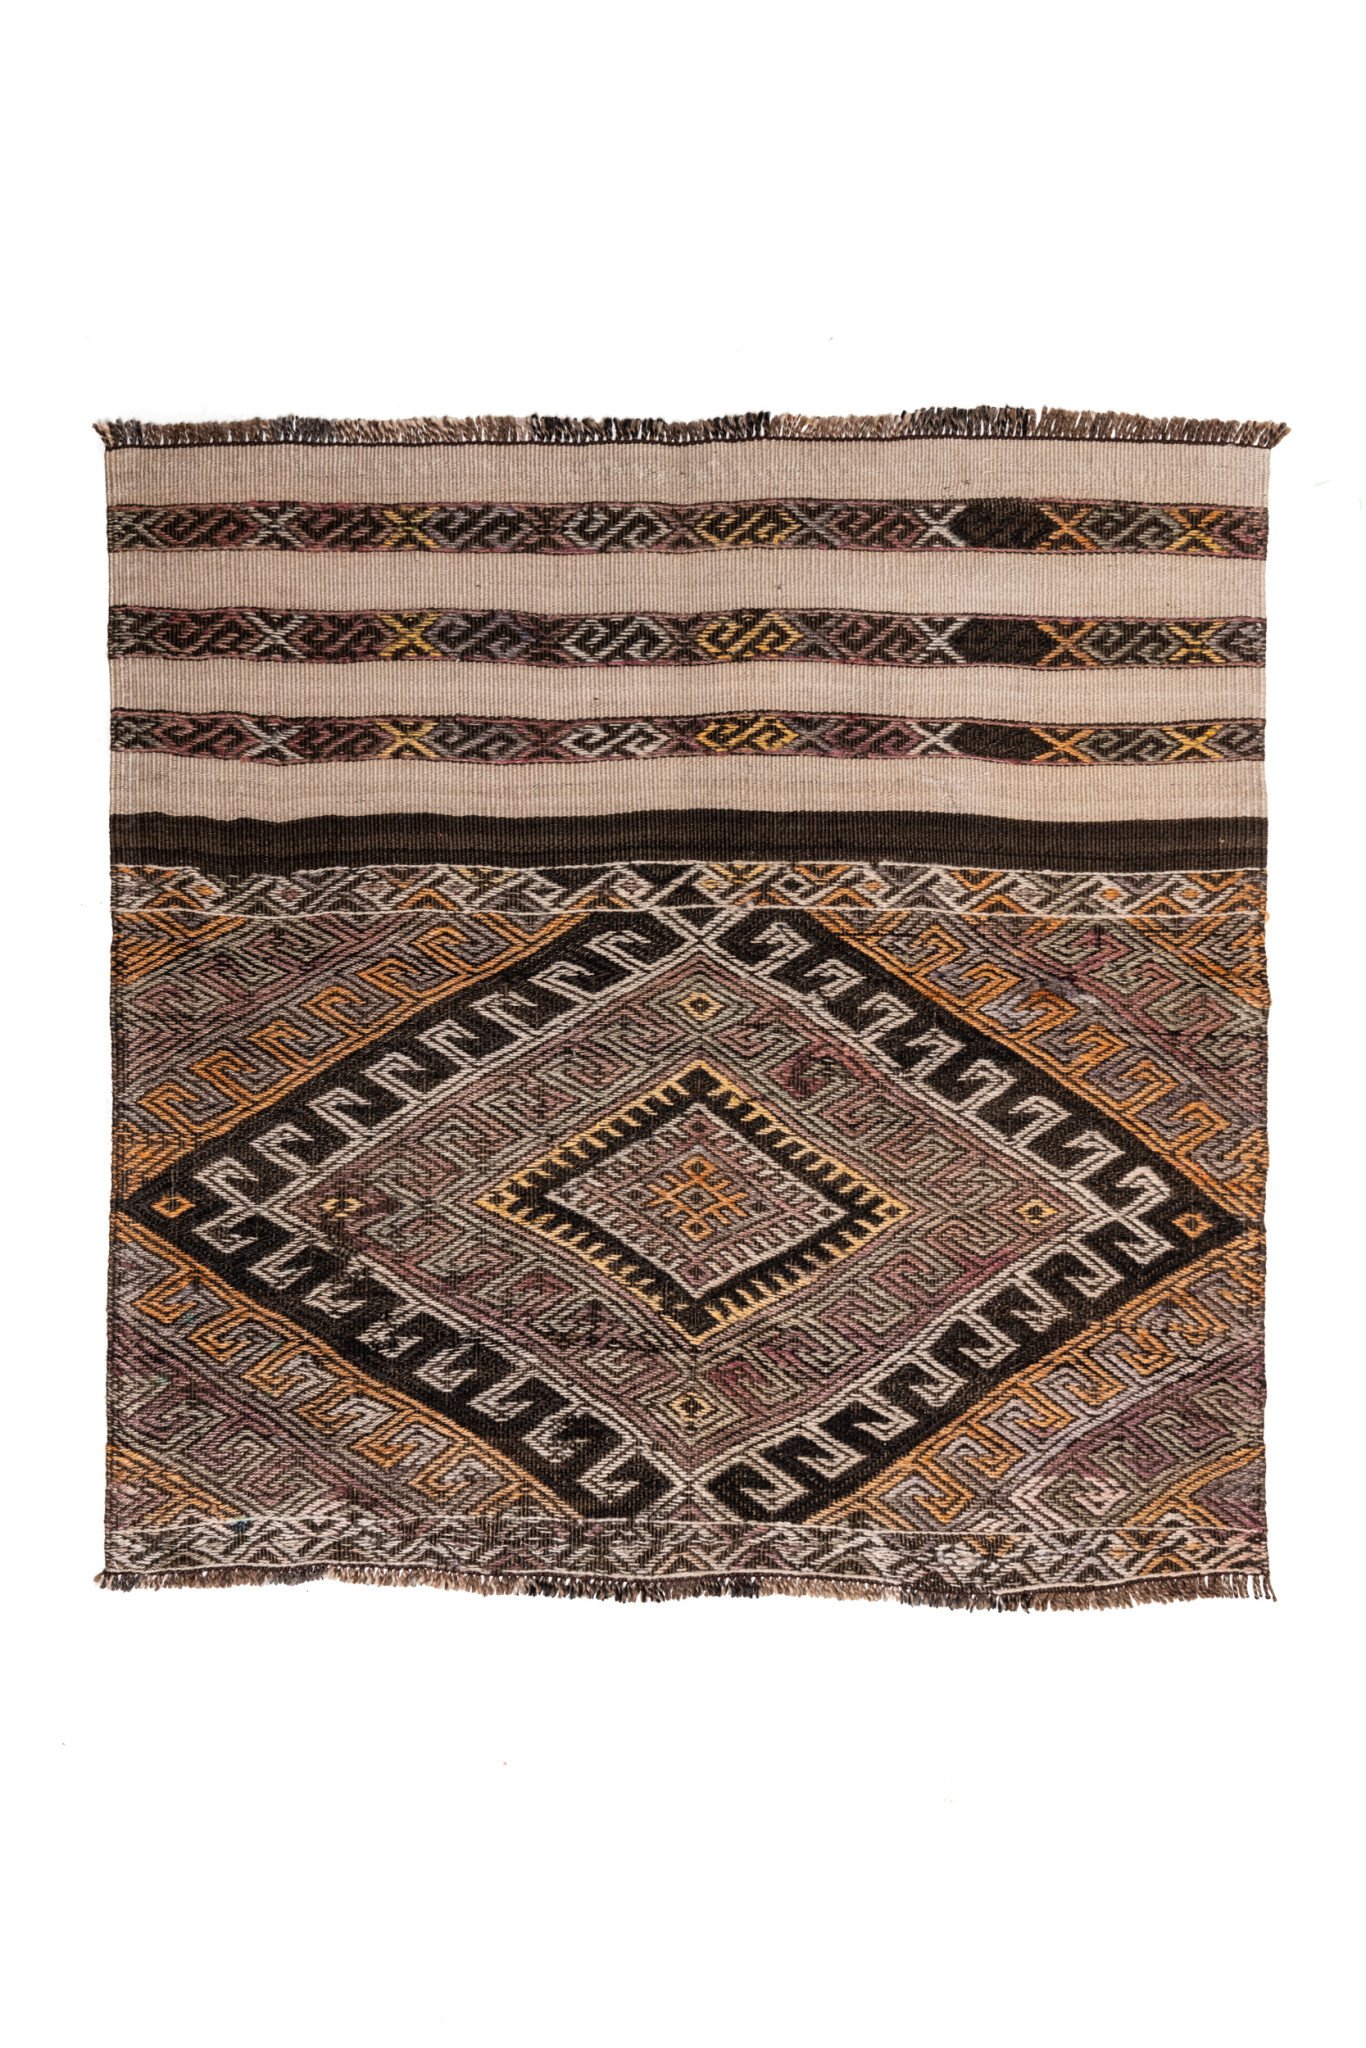 cruise gijzelaar puree Vintage kelim tapijt - 83cm - Turkije #1 • Couleur Locale